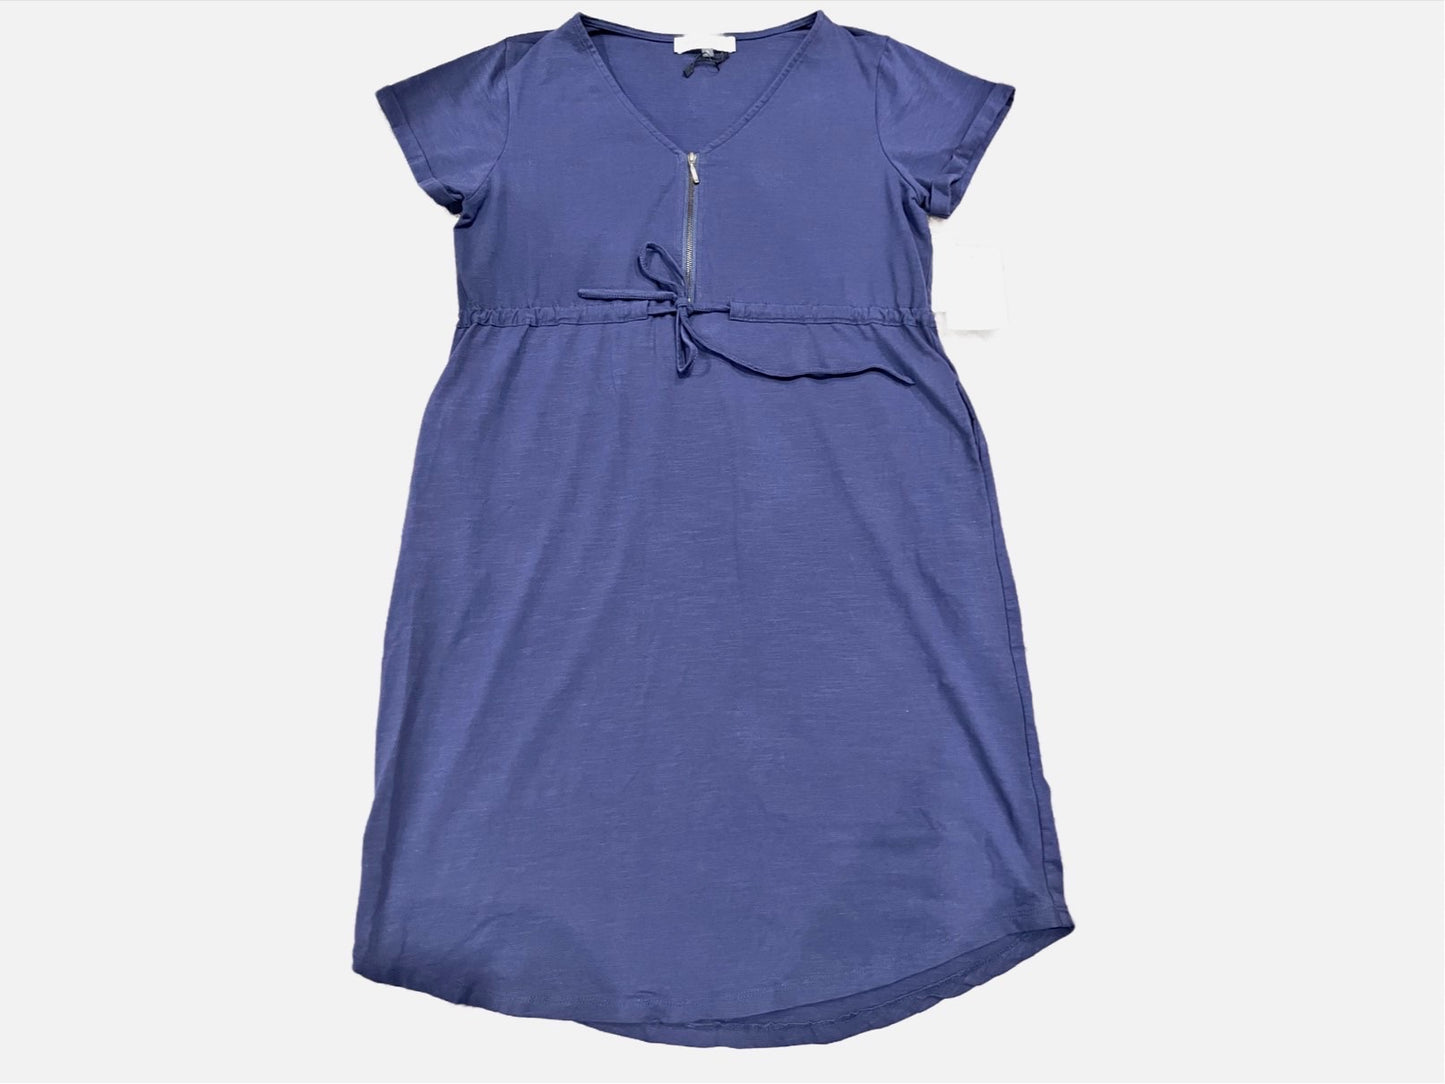 Maternity dress, size S, NWT